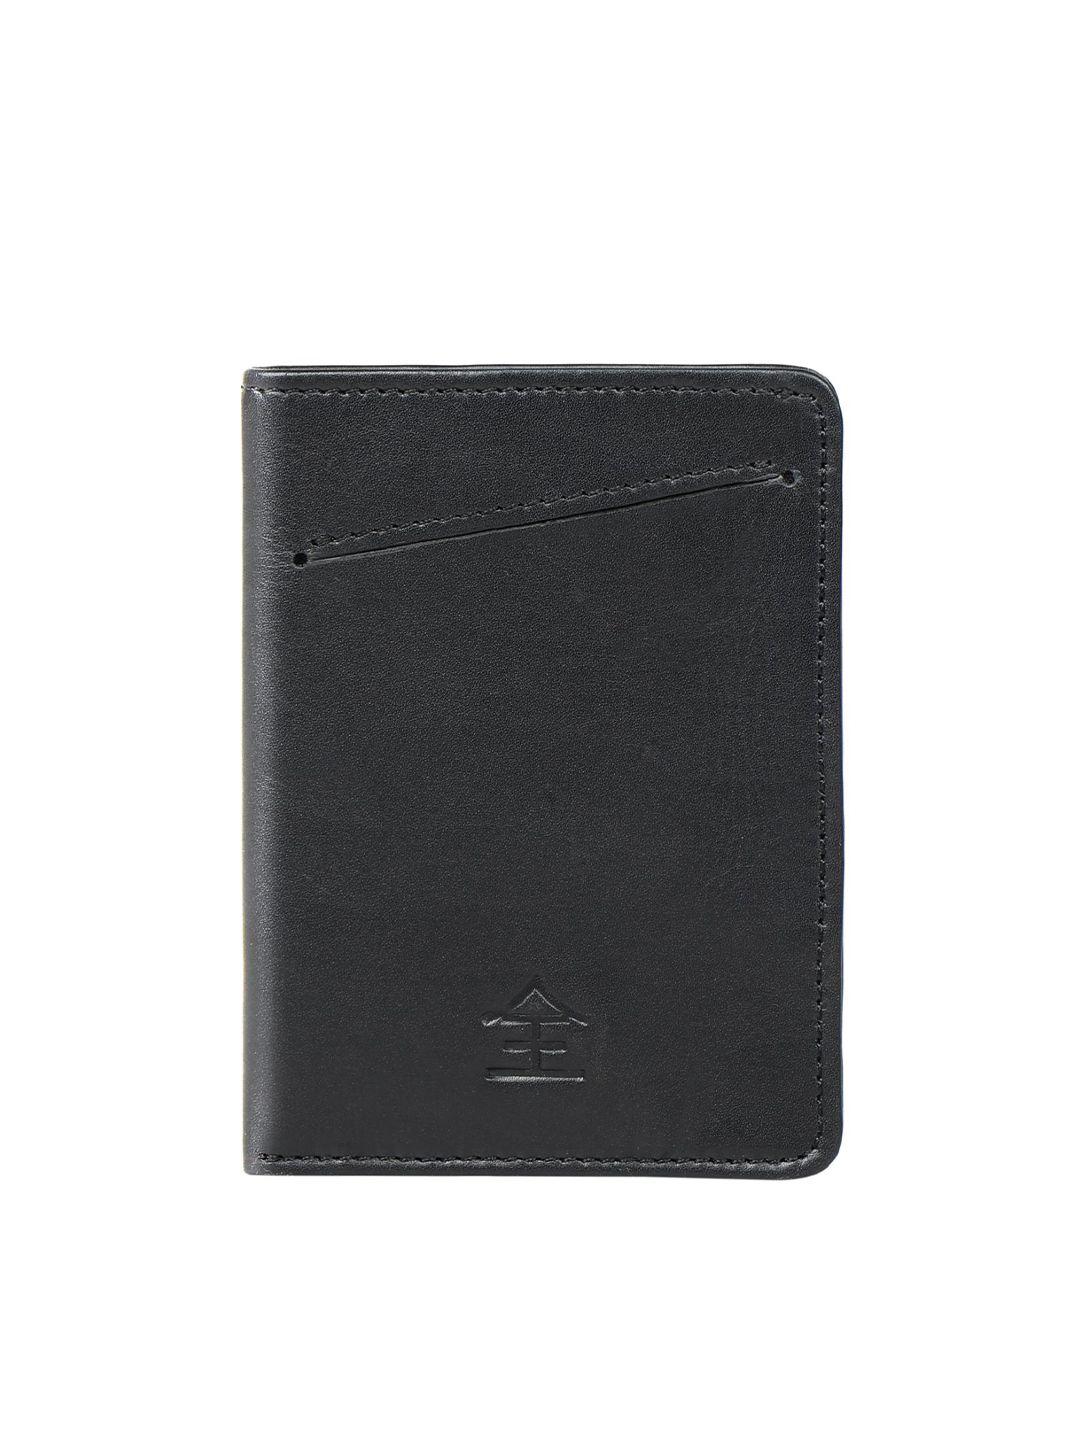 hidesign women black leather two fold wallet